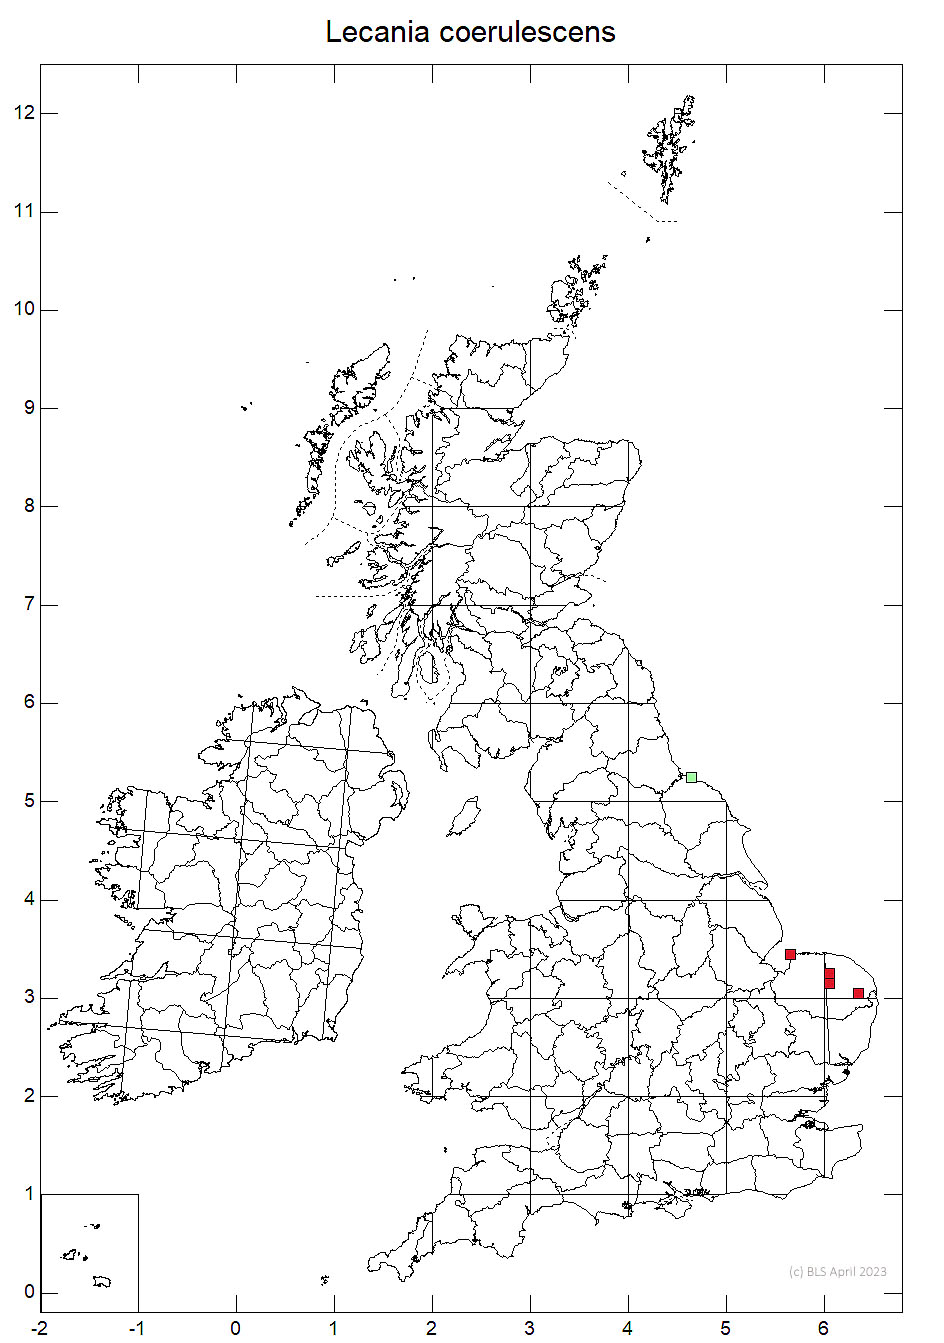 Lecania coerulescens 10km sq distribution map